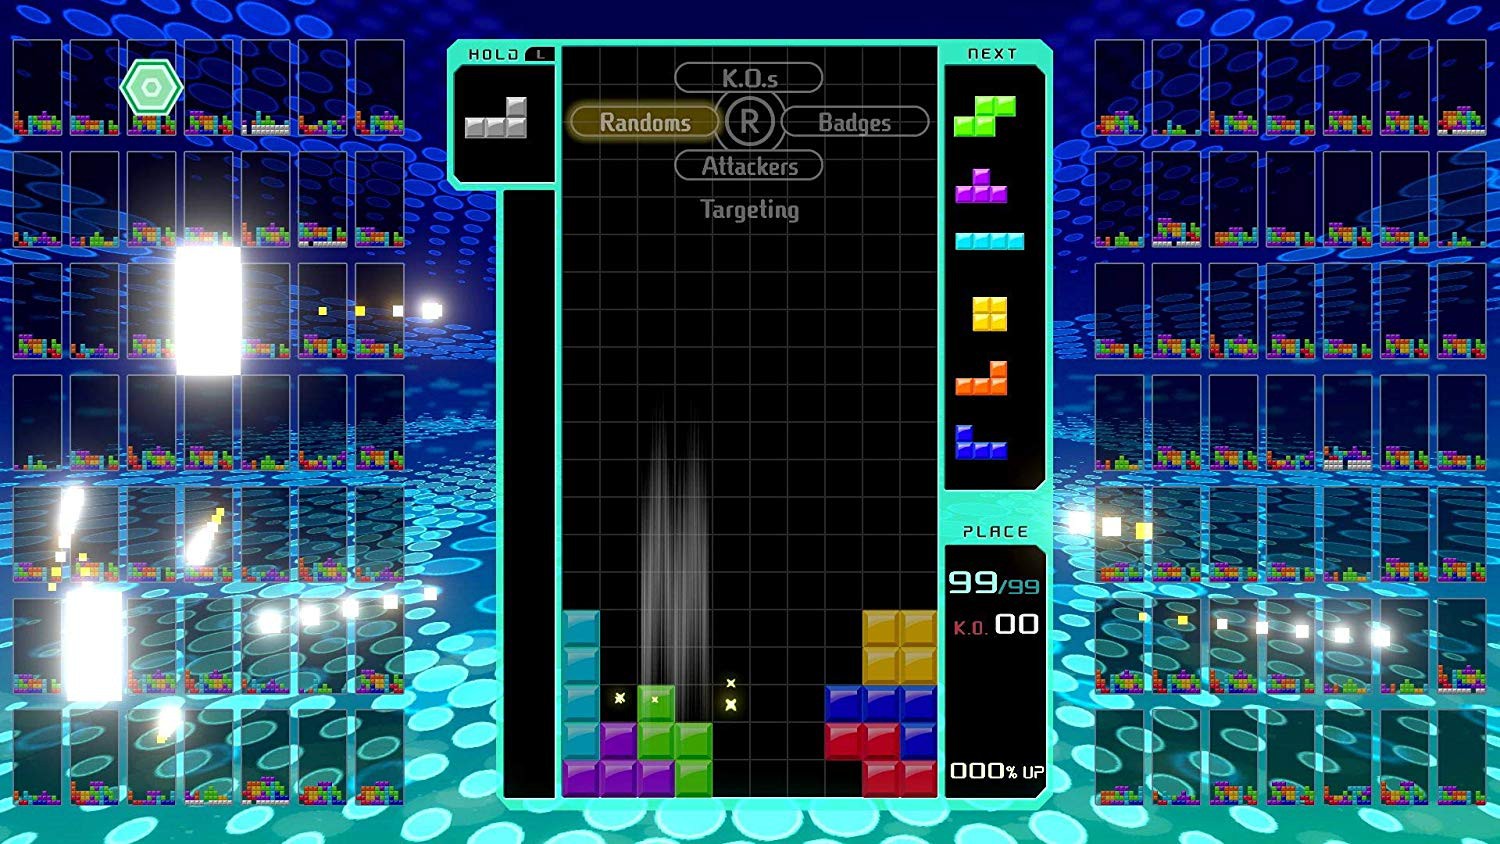 Tetris 99 + 12months Nintendo Switch Online membership